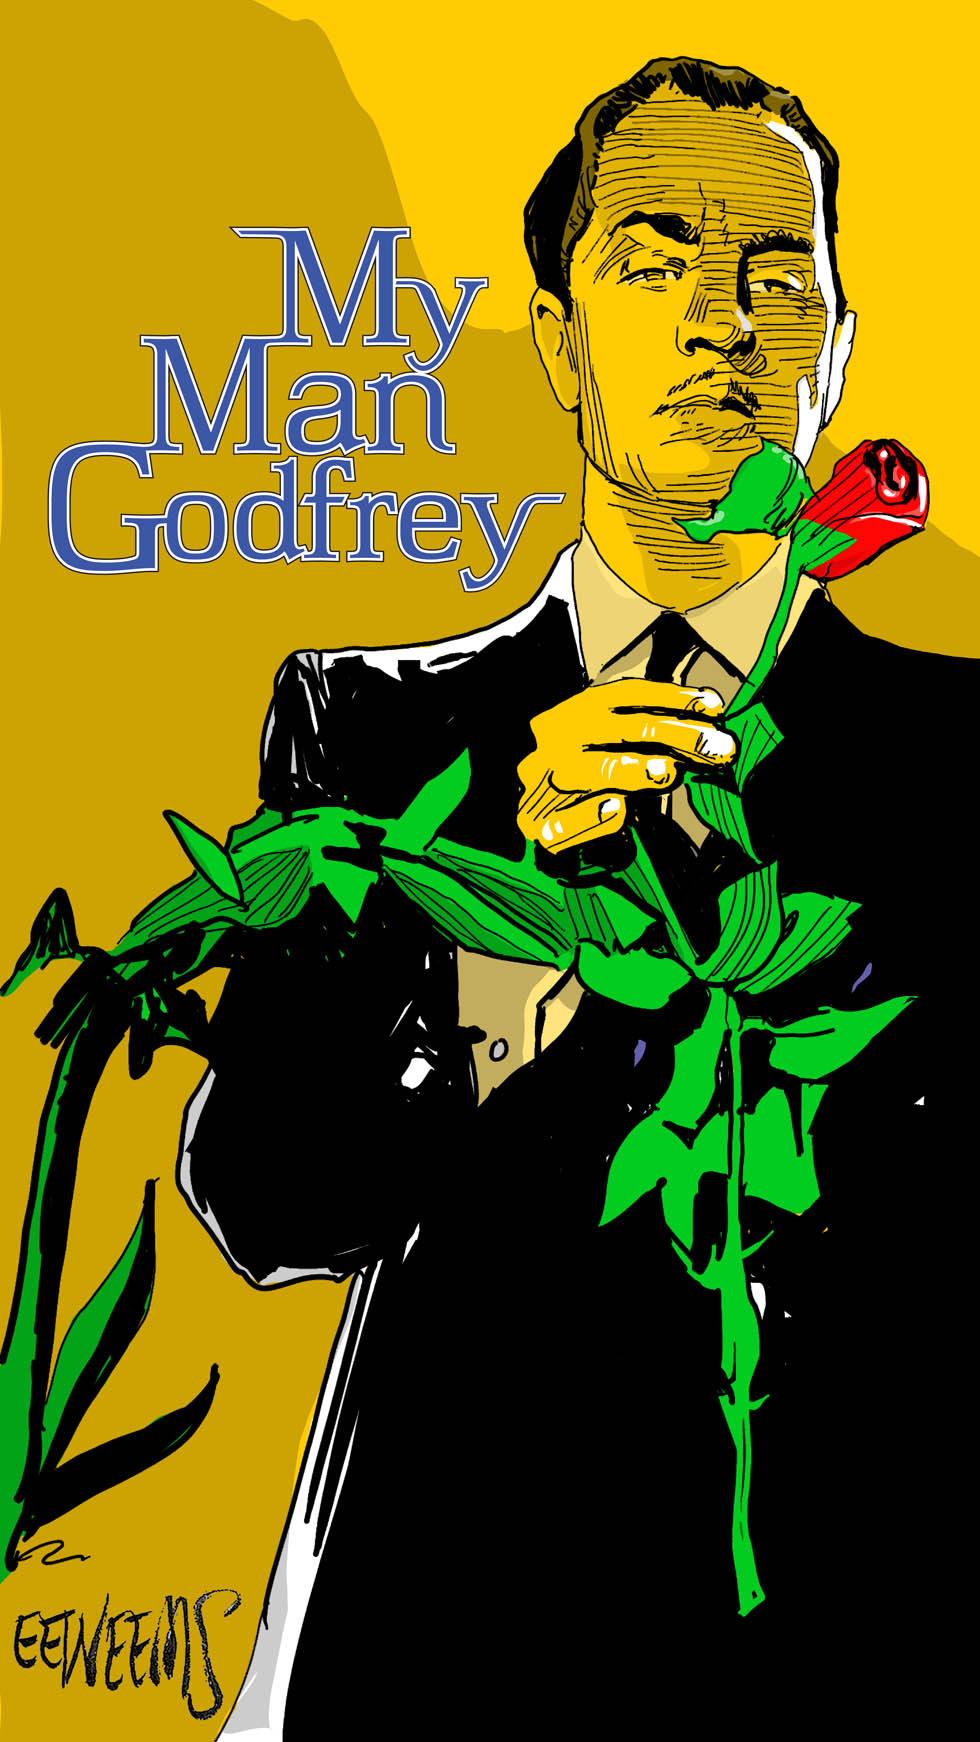 My Man Godfrey